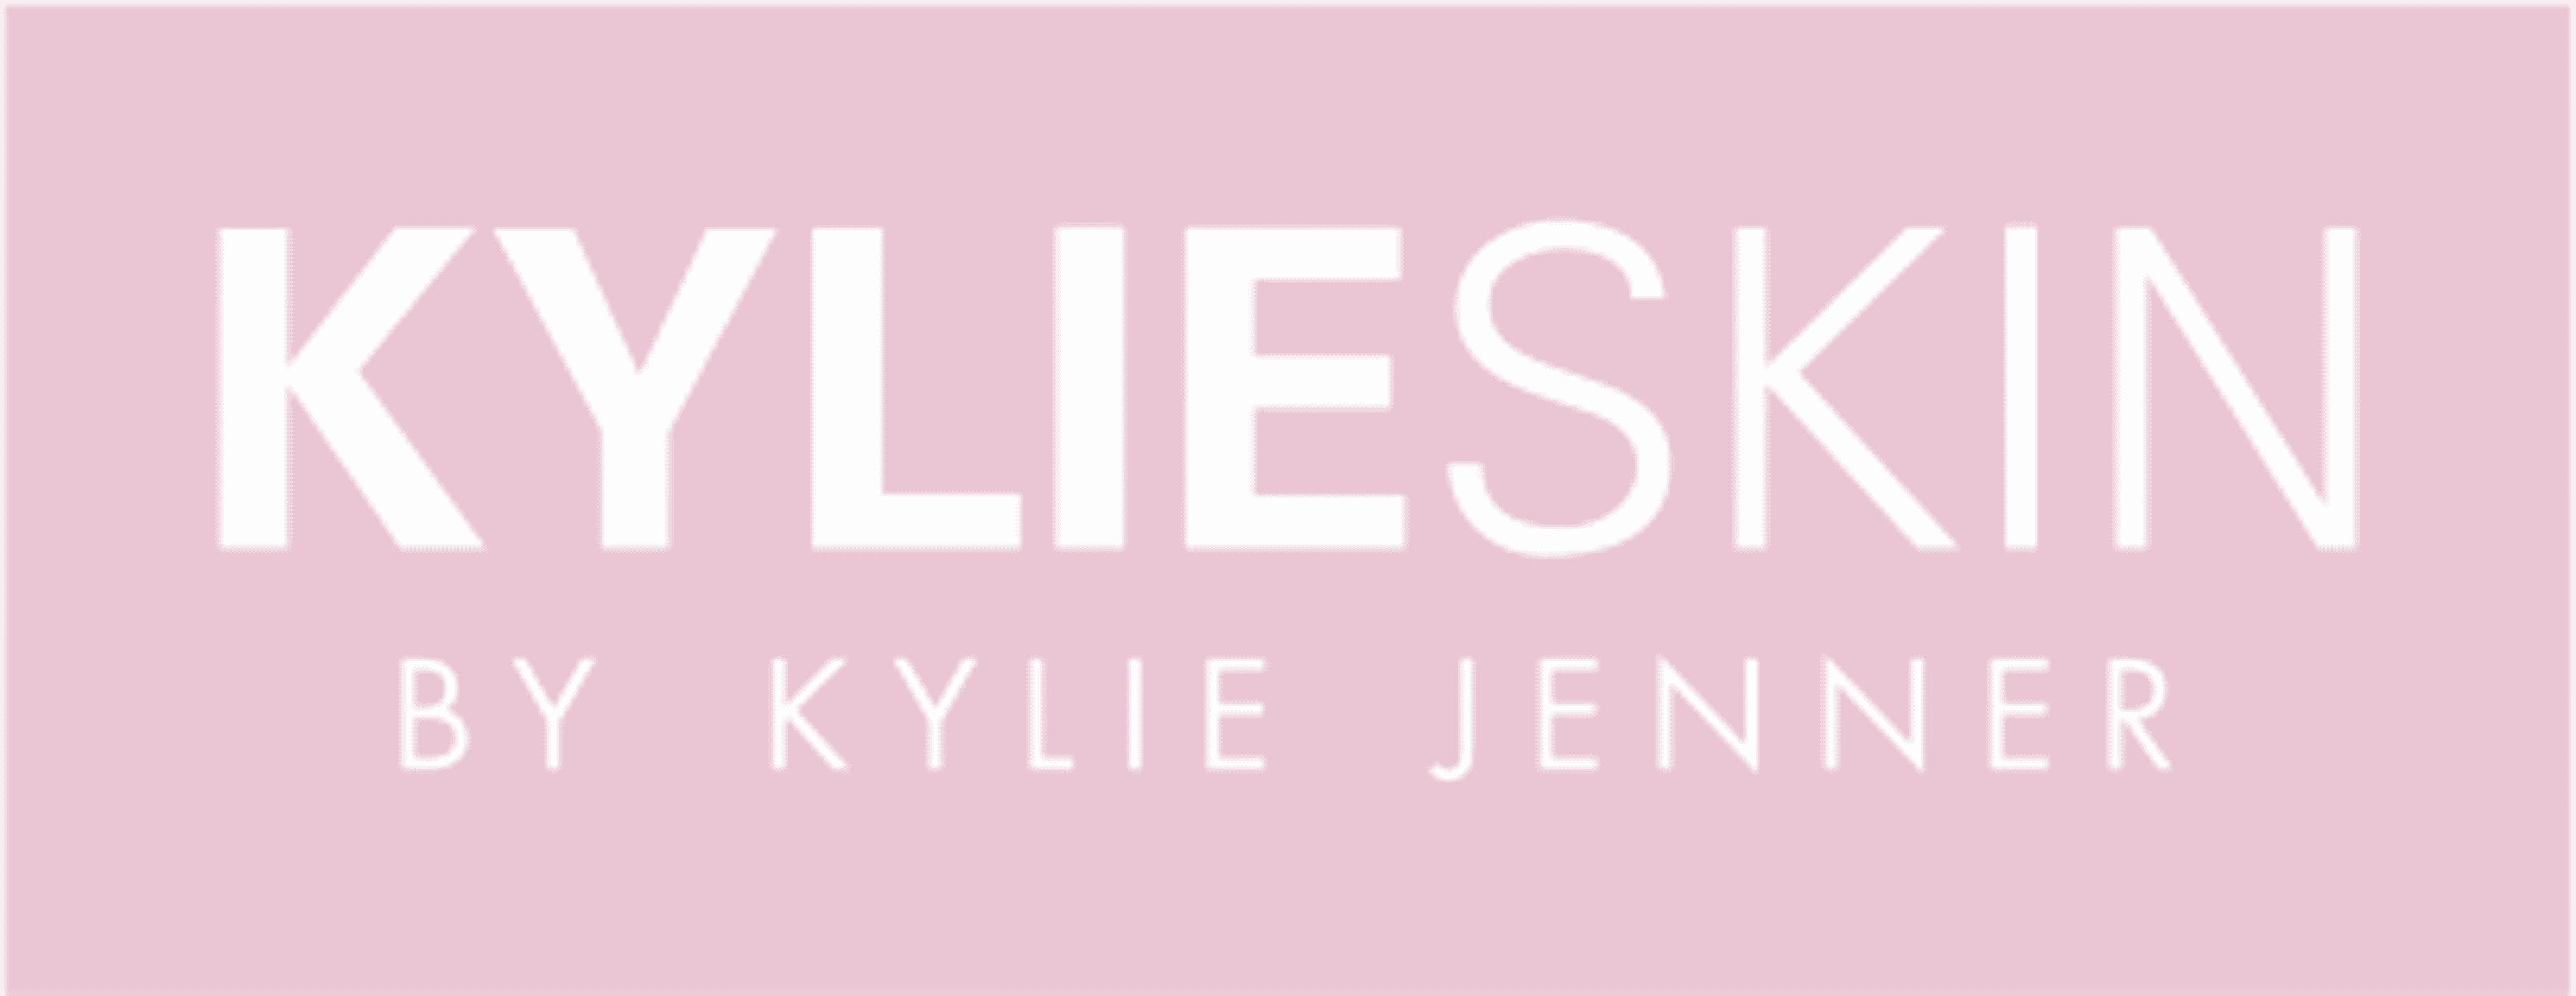 logo-kylie-skin.png